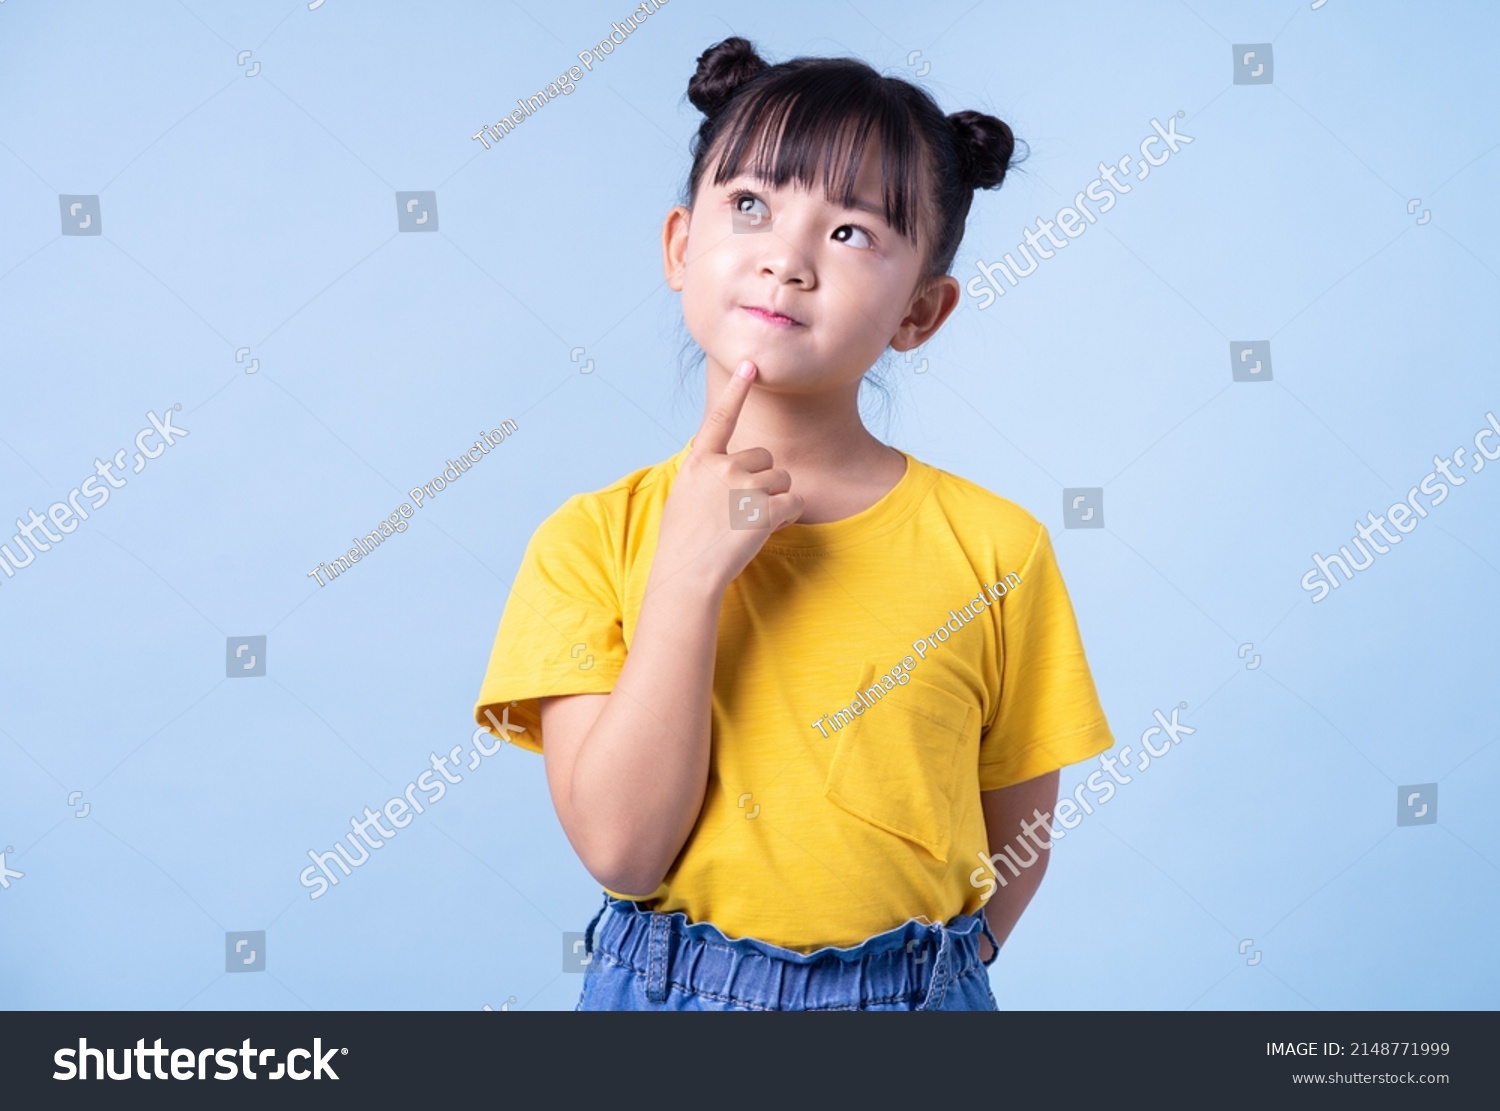 Image of Asian child posing on blue background #2148771999